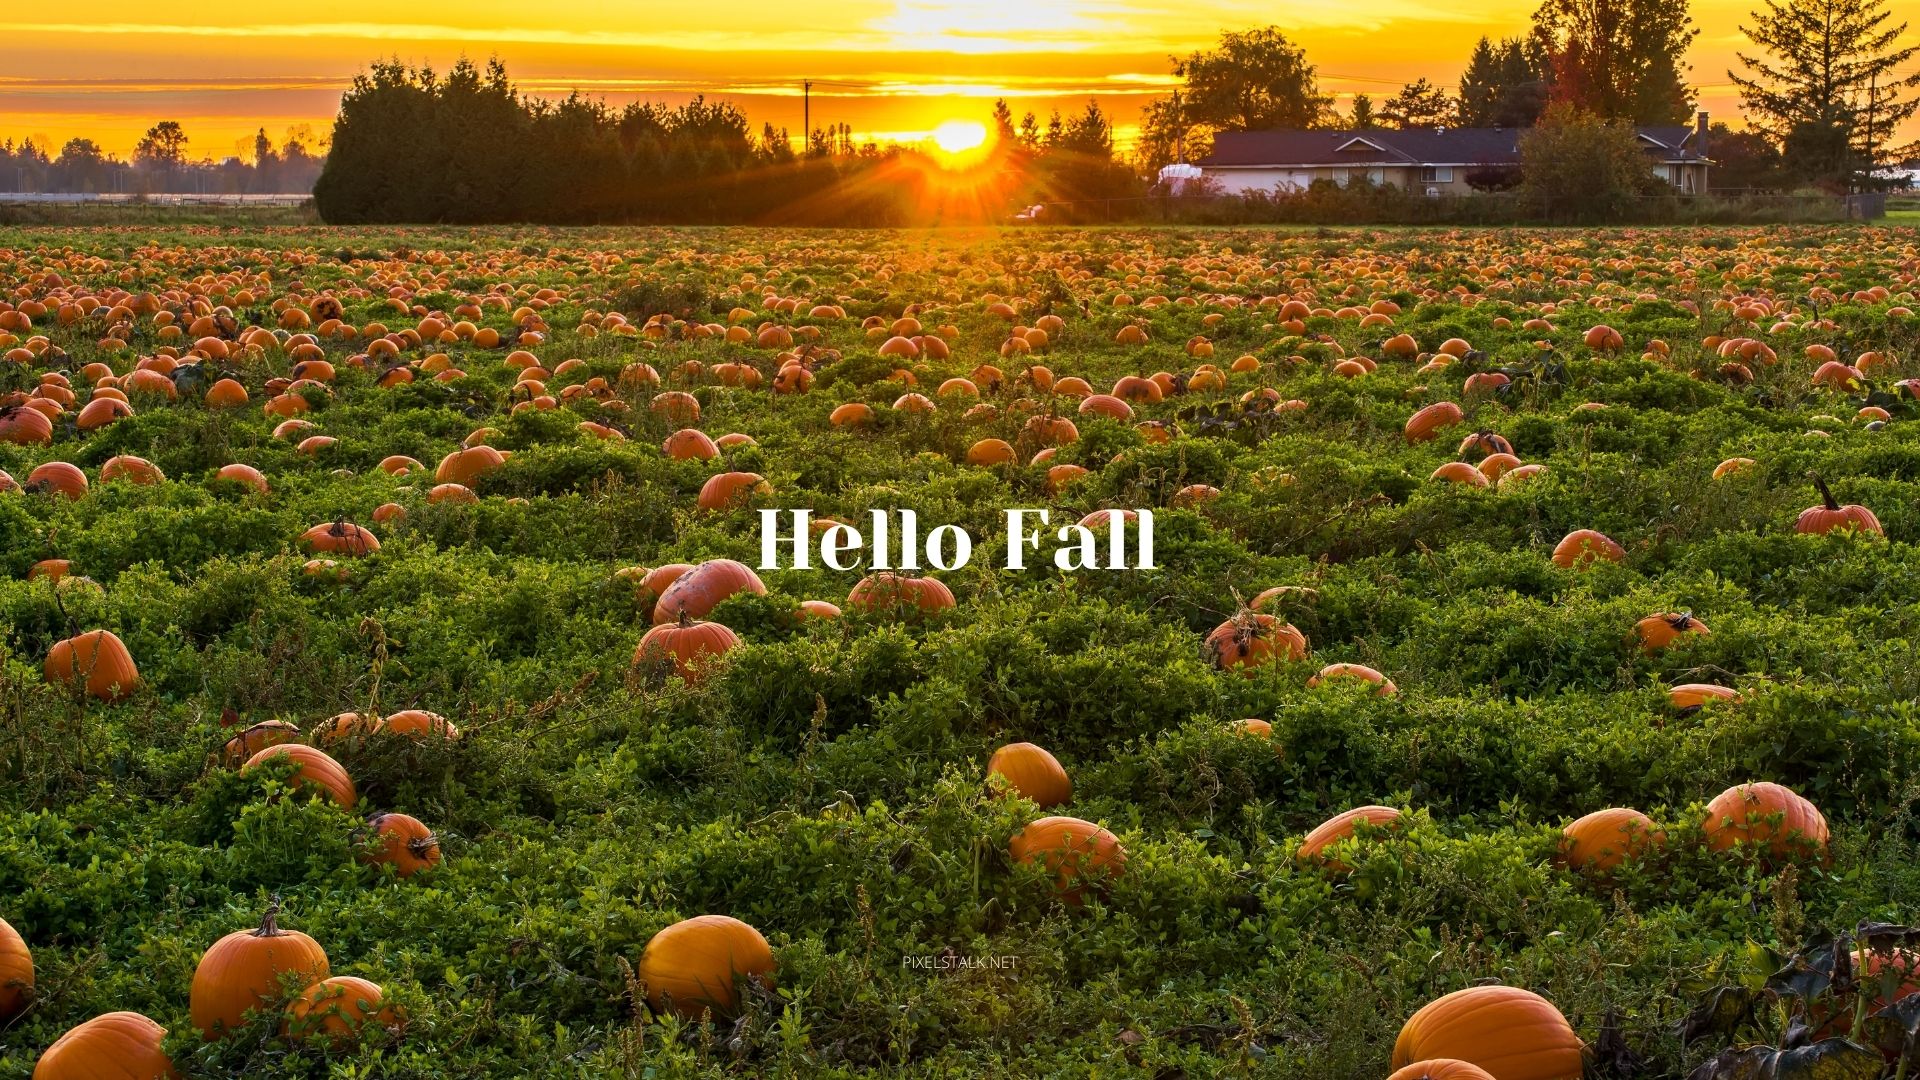 Fall Pumpkin Wallpaper Free download